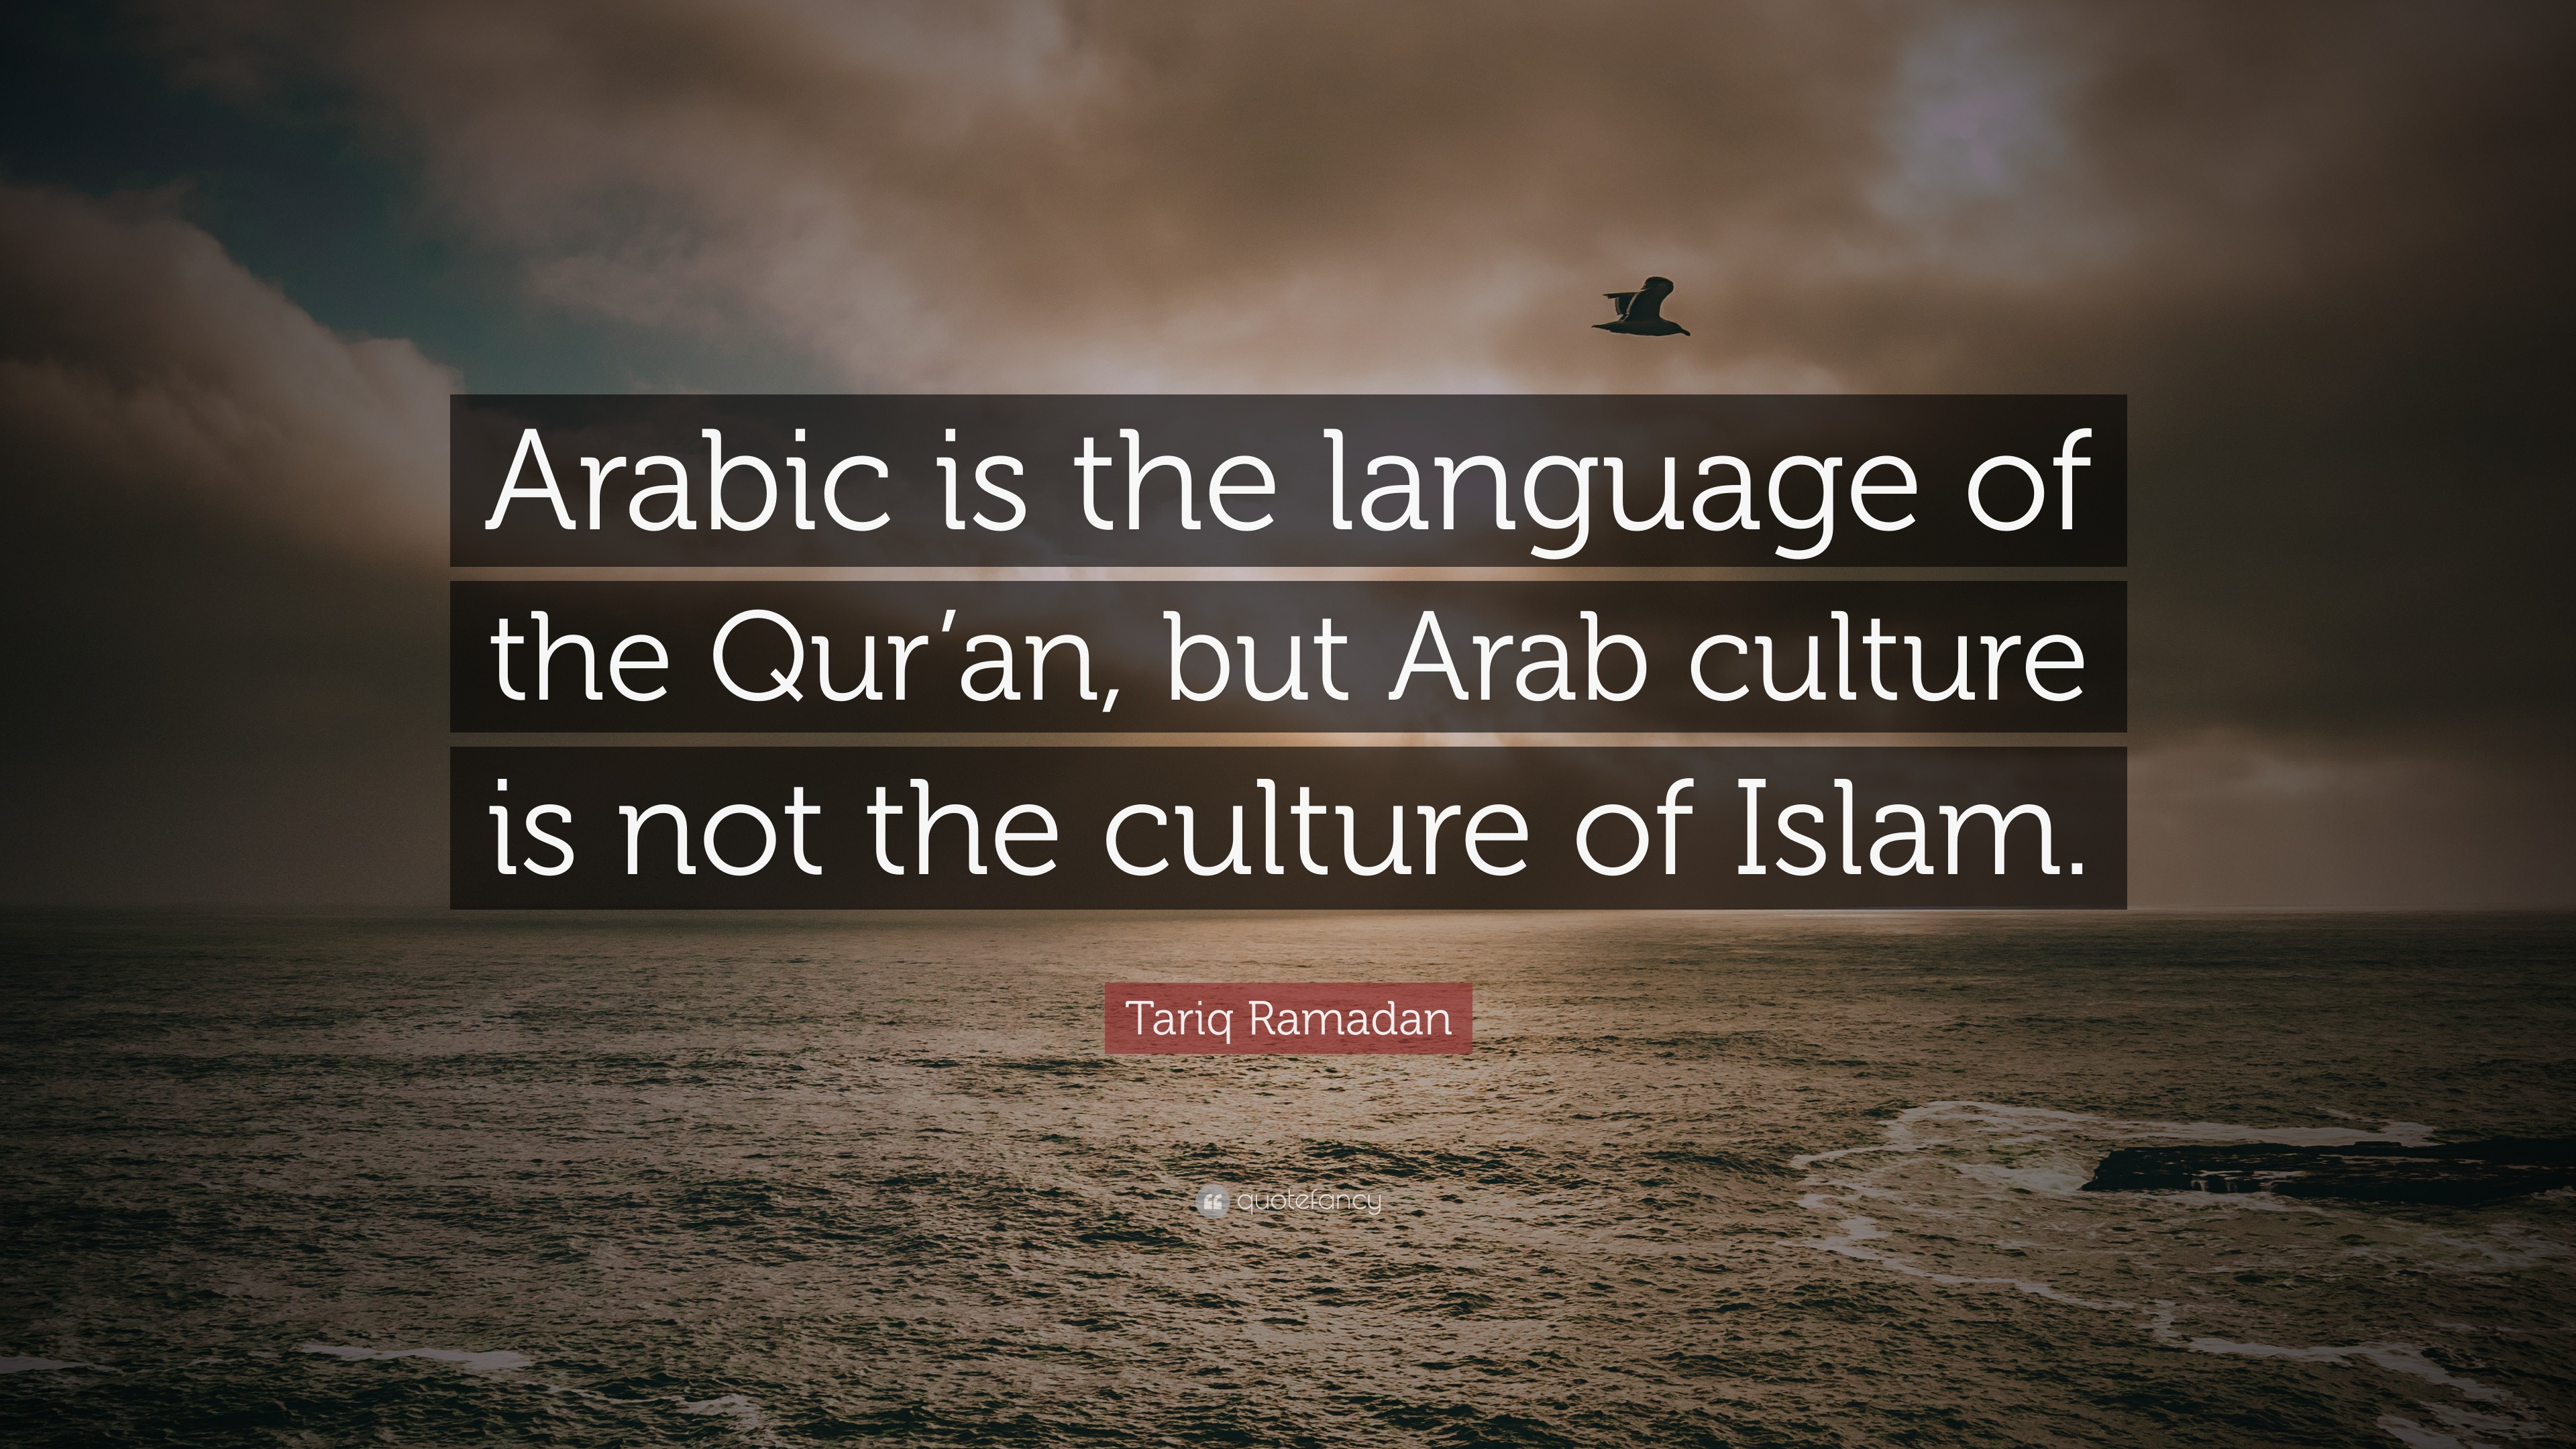 Tariq Ramadan Quote “Arabic is the language of the Qur’an